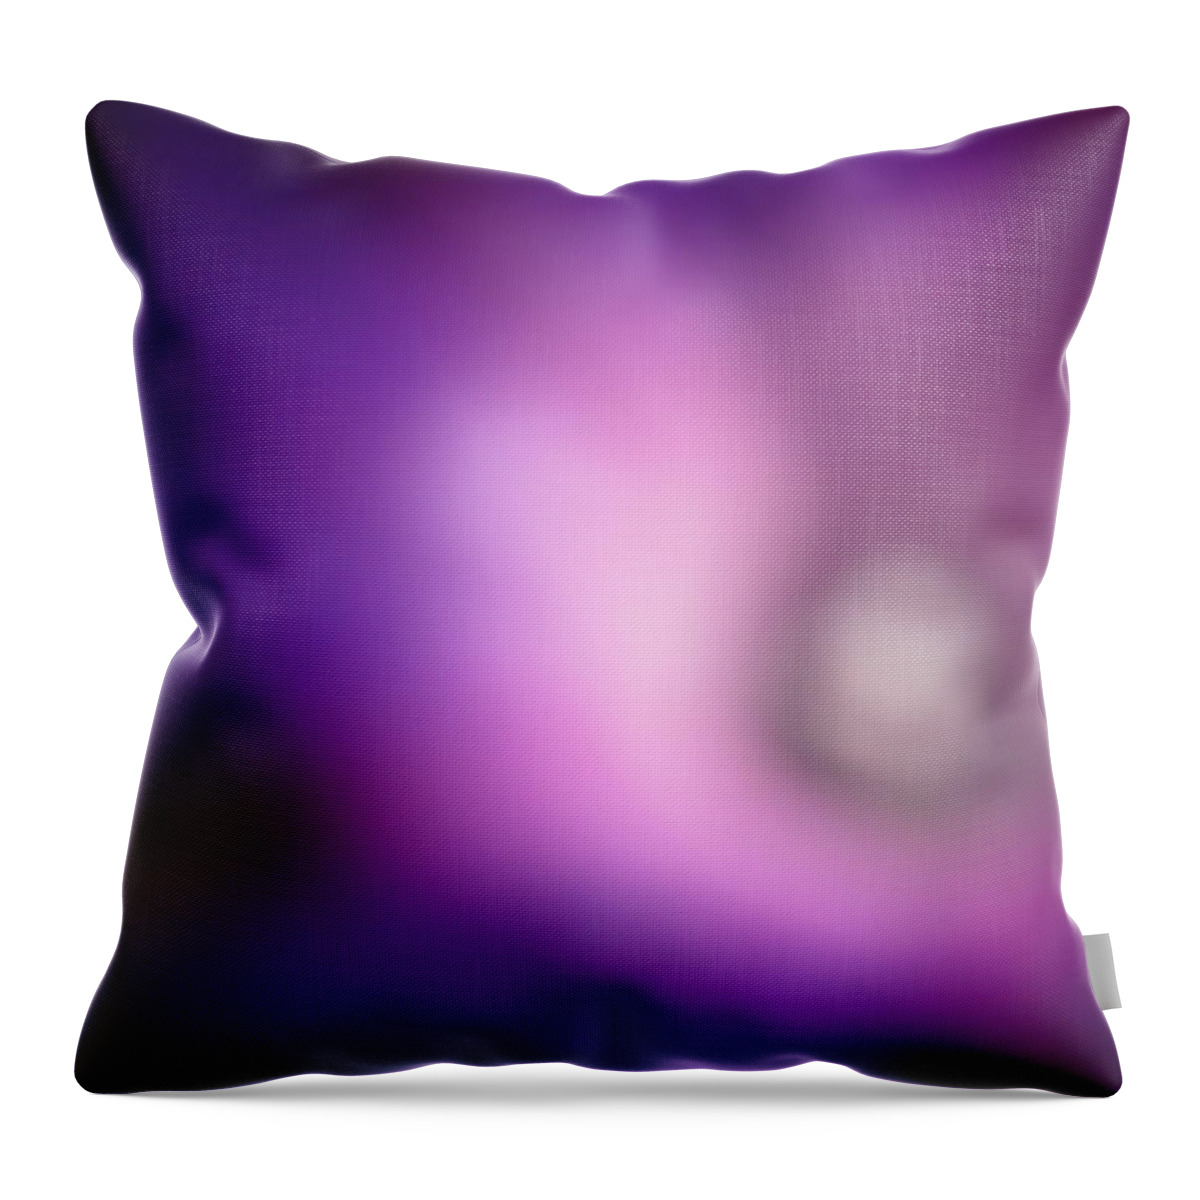 Flower Throw Pillow featuring the photograph Purple dream by Maria Aduke Alabi